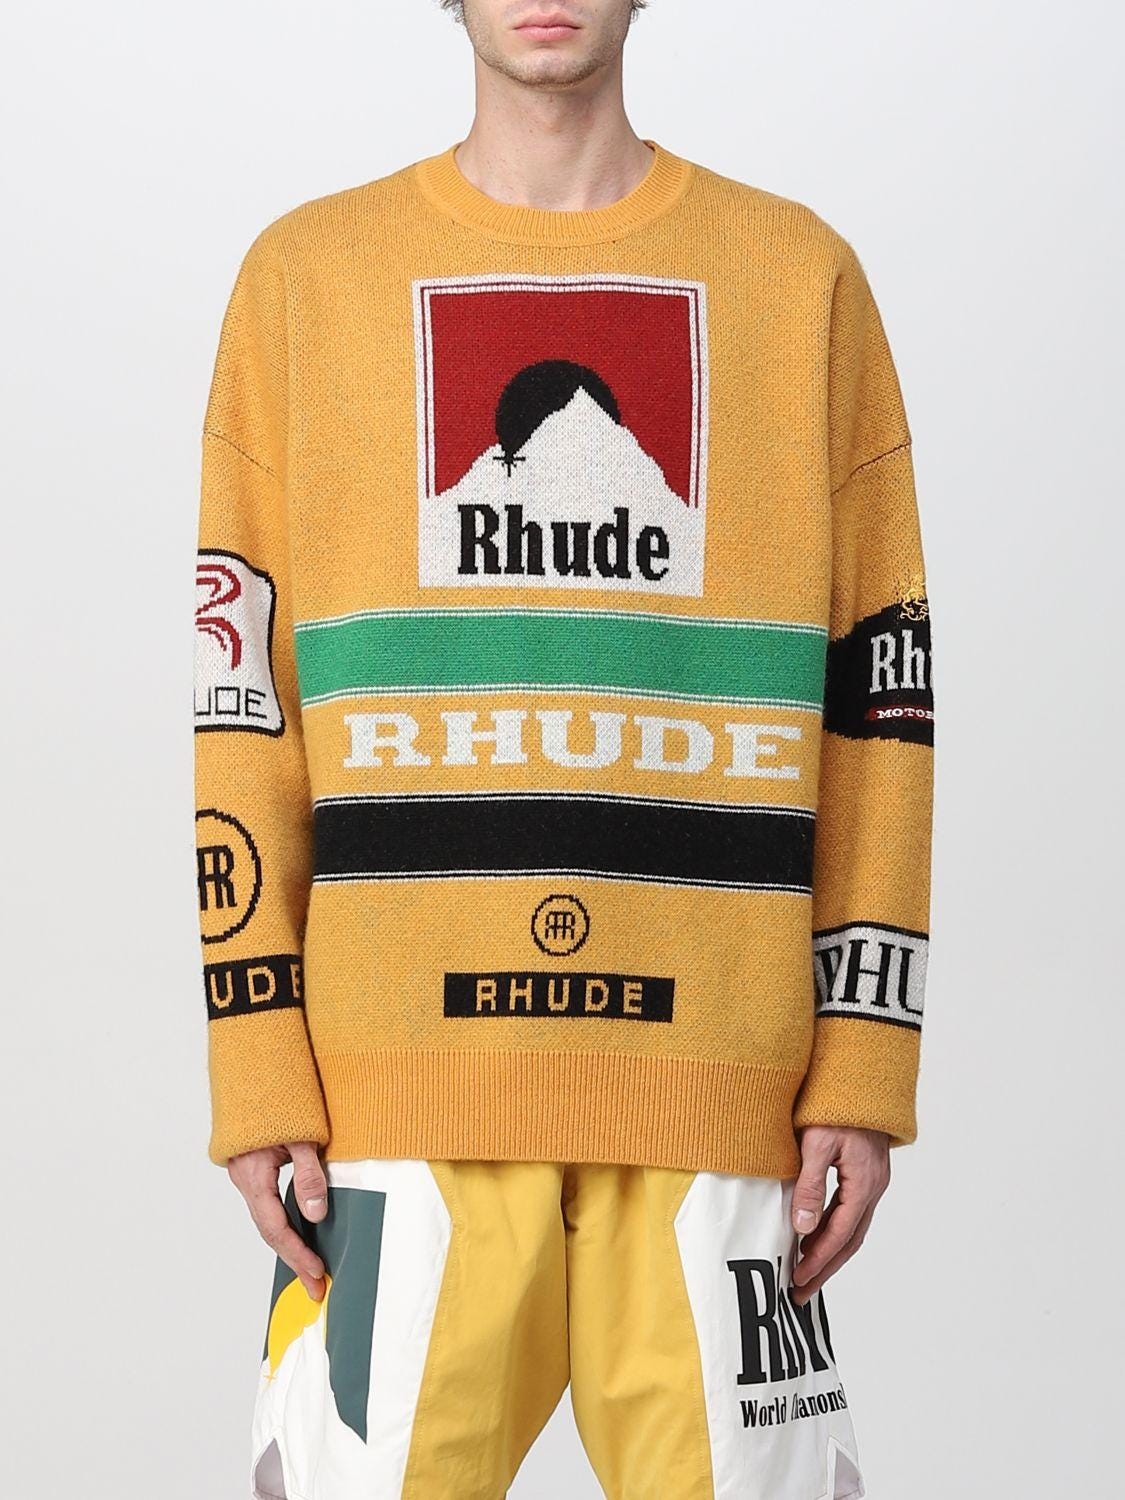 Introduction to the Rhude Sweatshirt | by Rhudeclothing | Medium